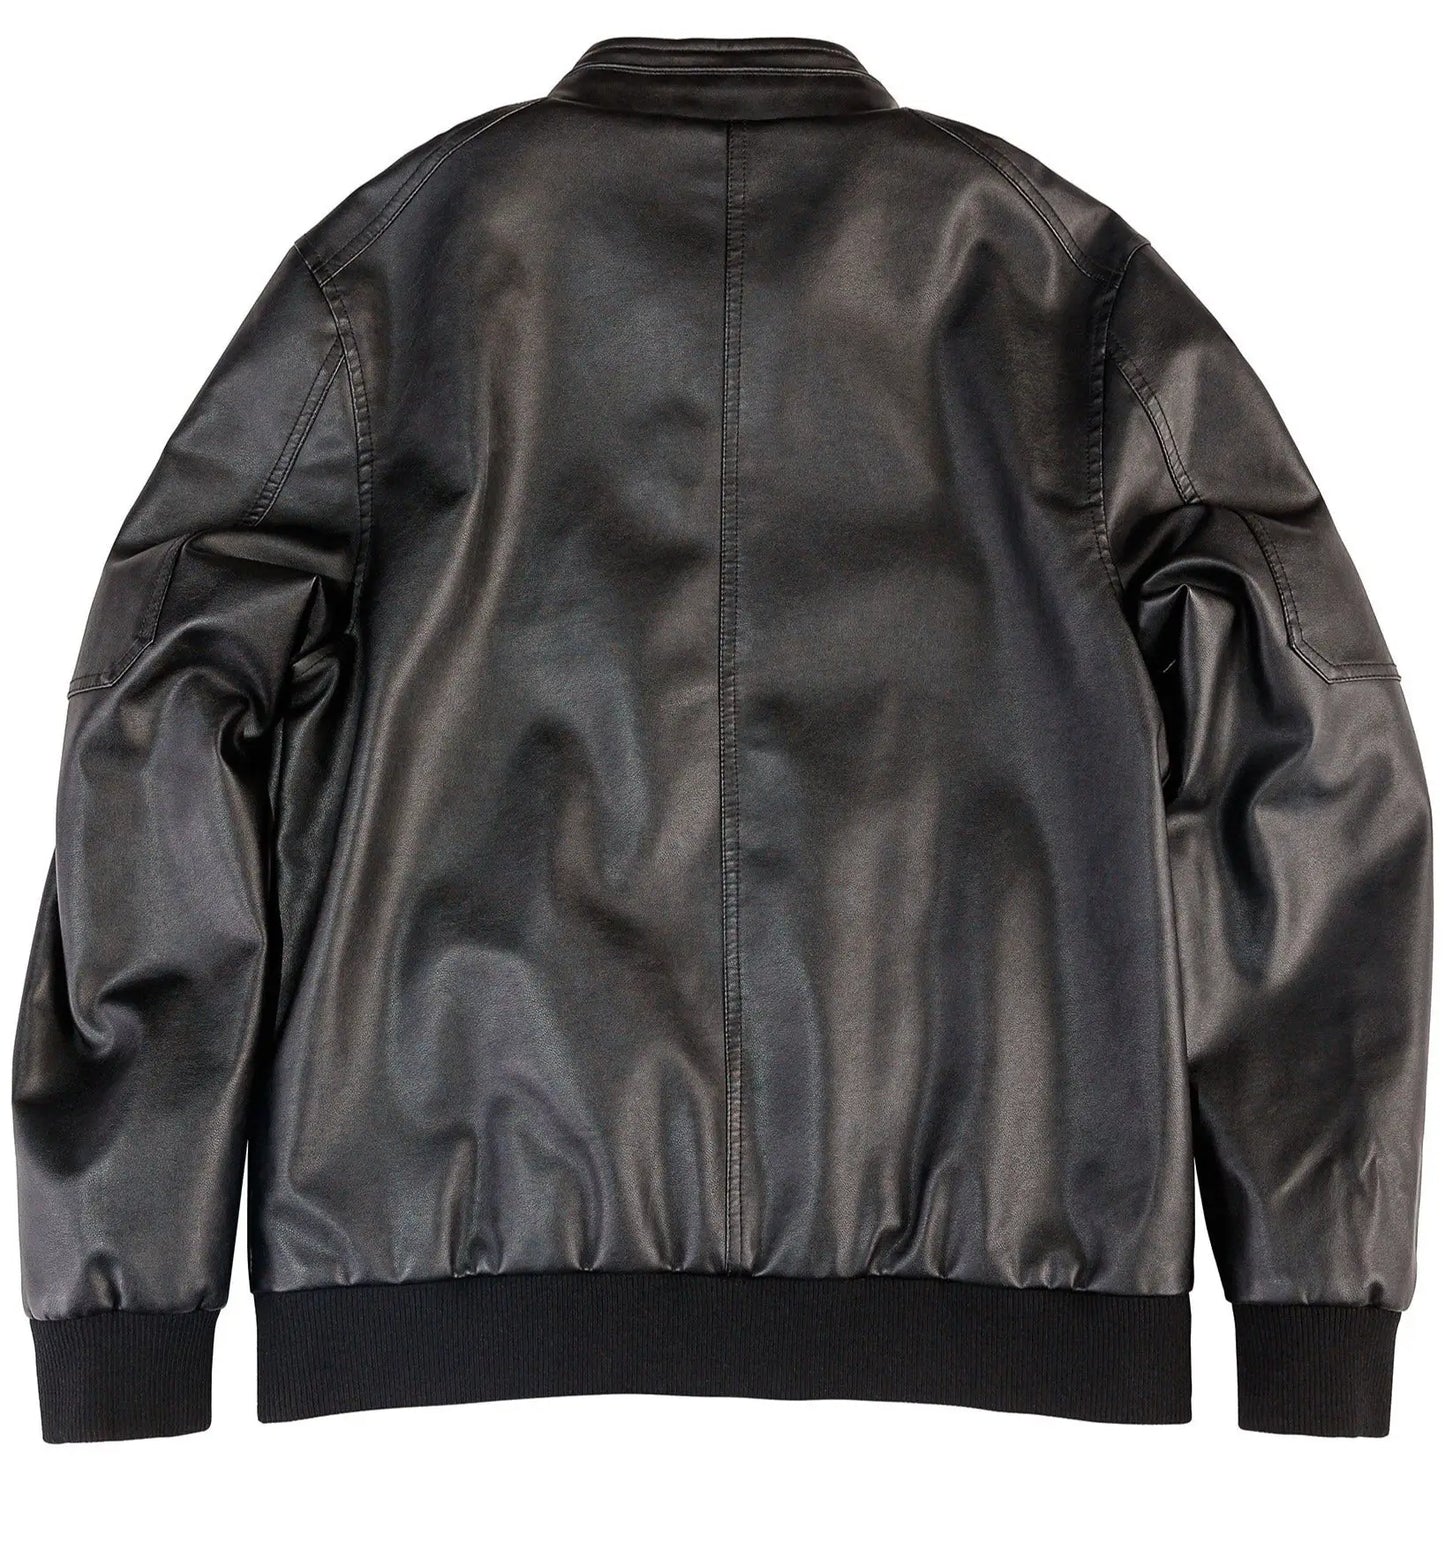 "NYC" Leatherette Jacket